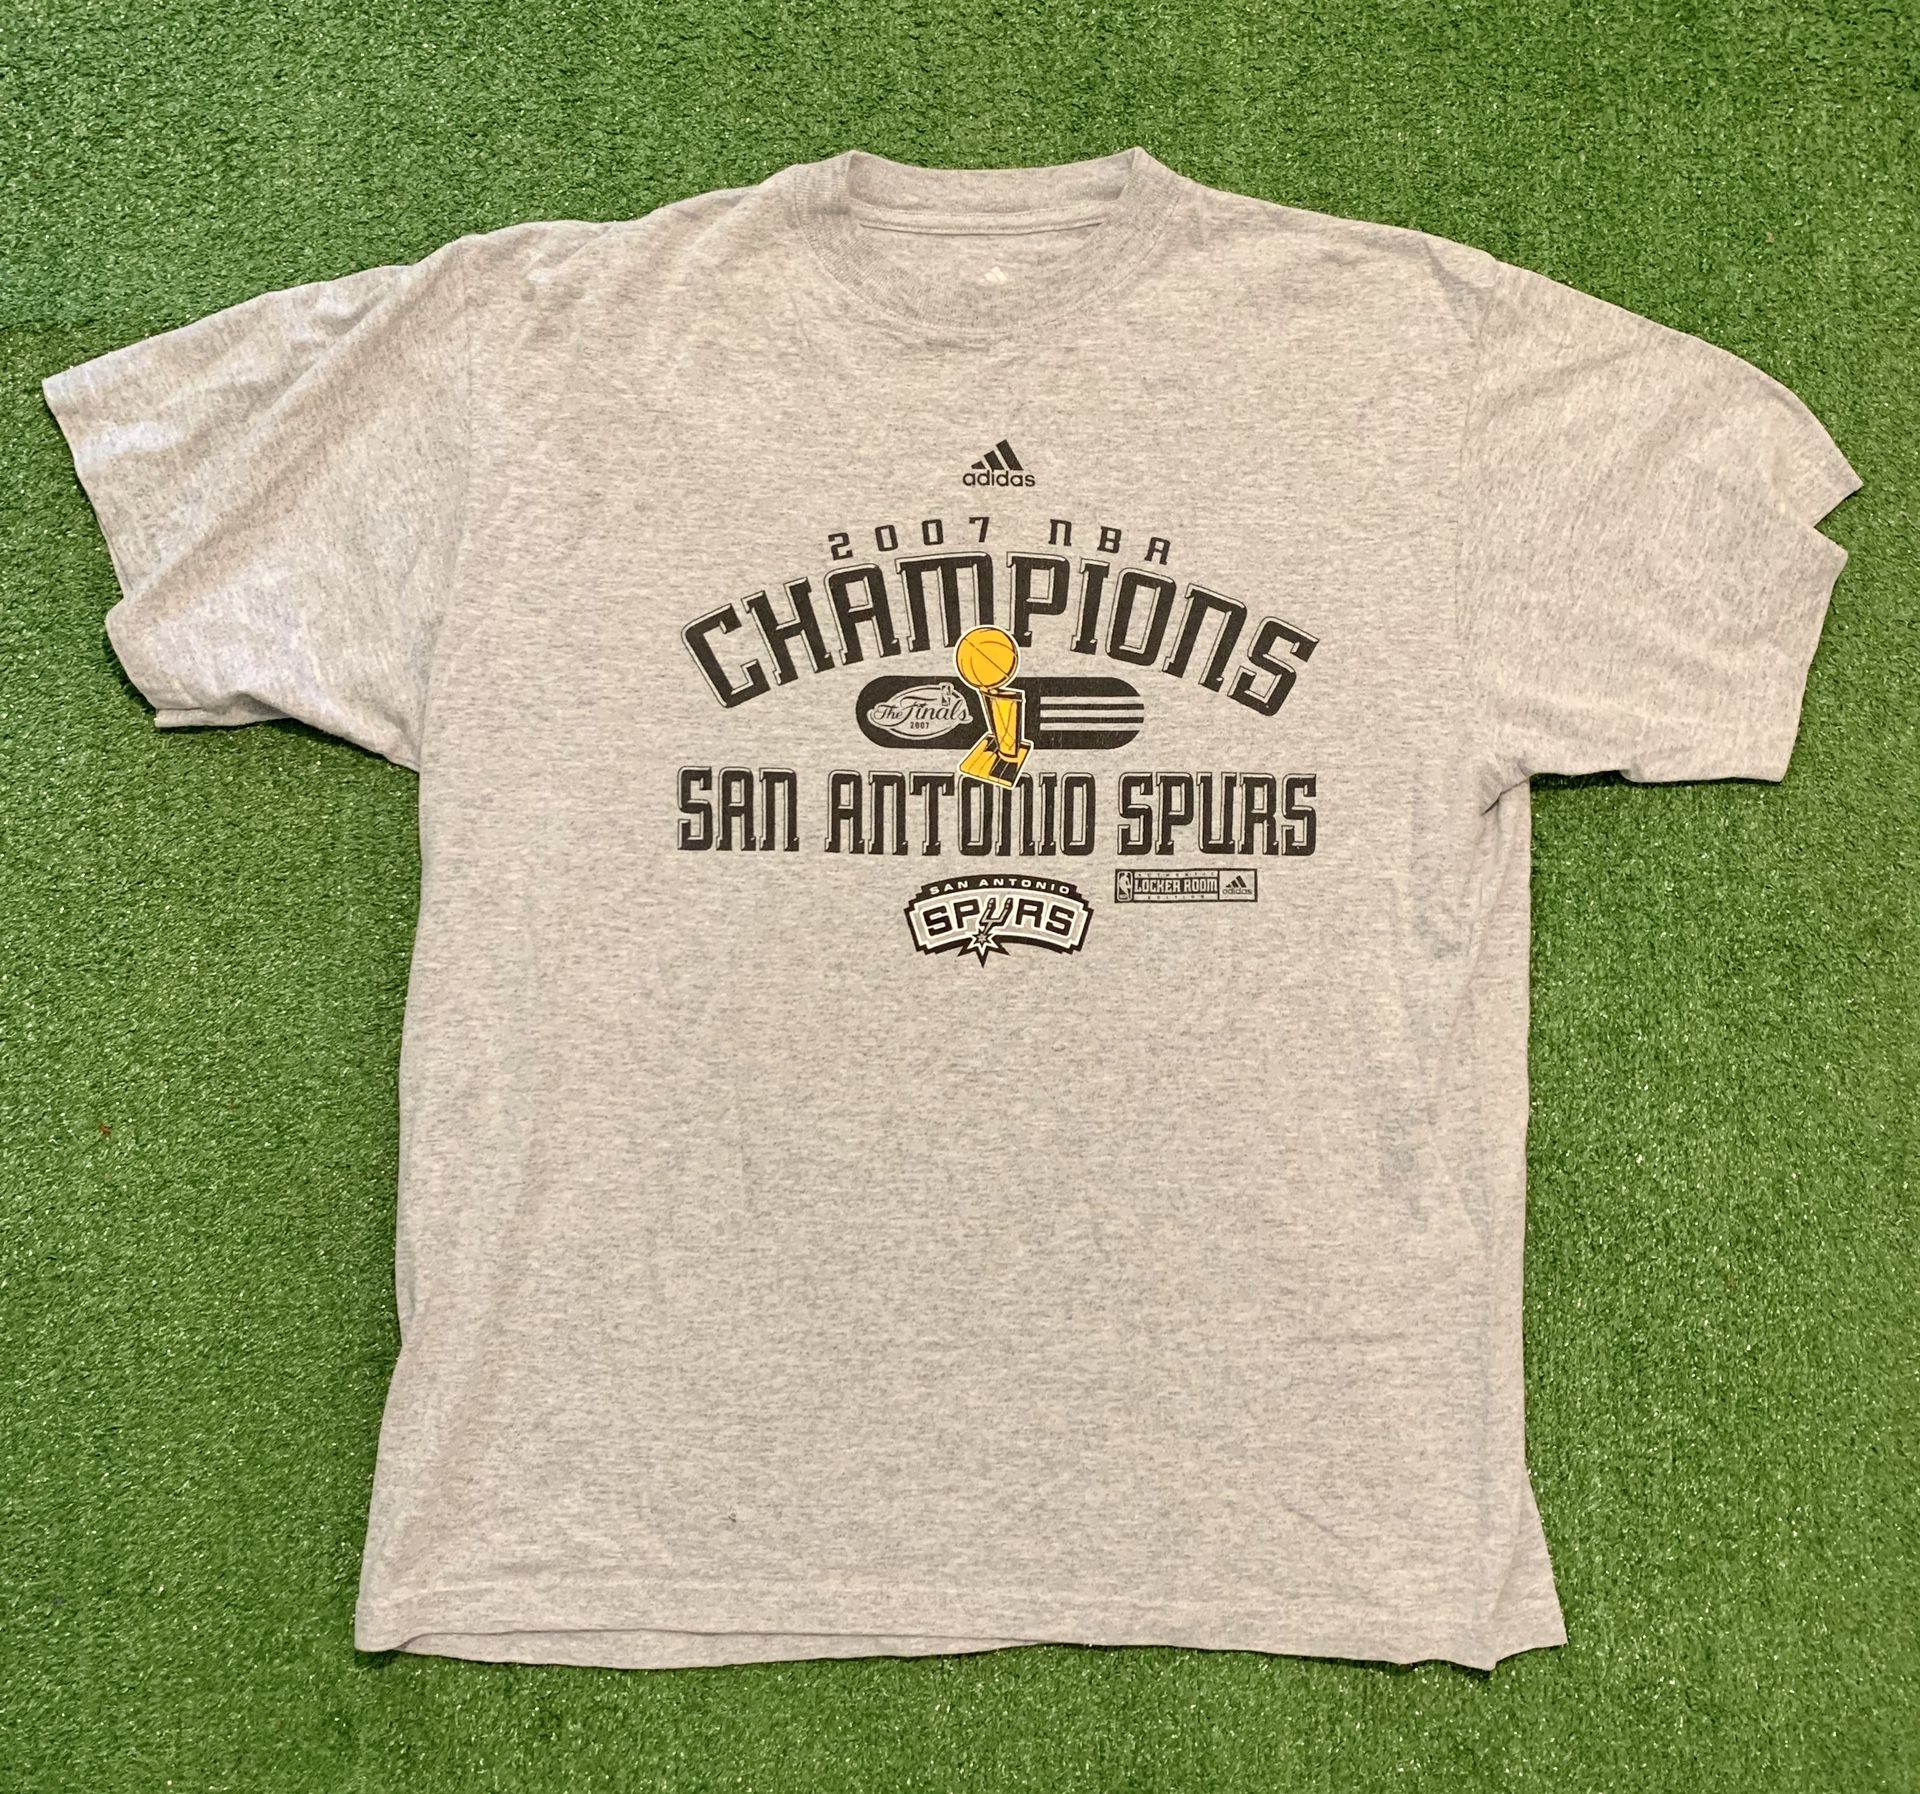 San Antonio Spurs 2007 NBA Champions Adidas T-shirt. Size Large. Good condition, see all pics